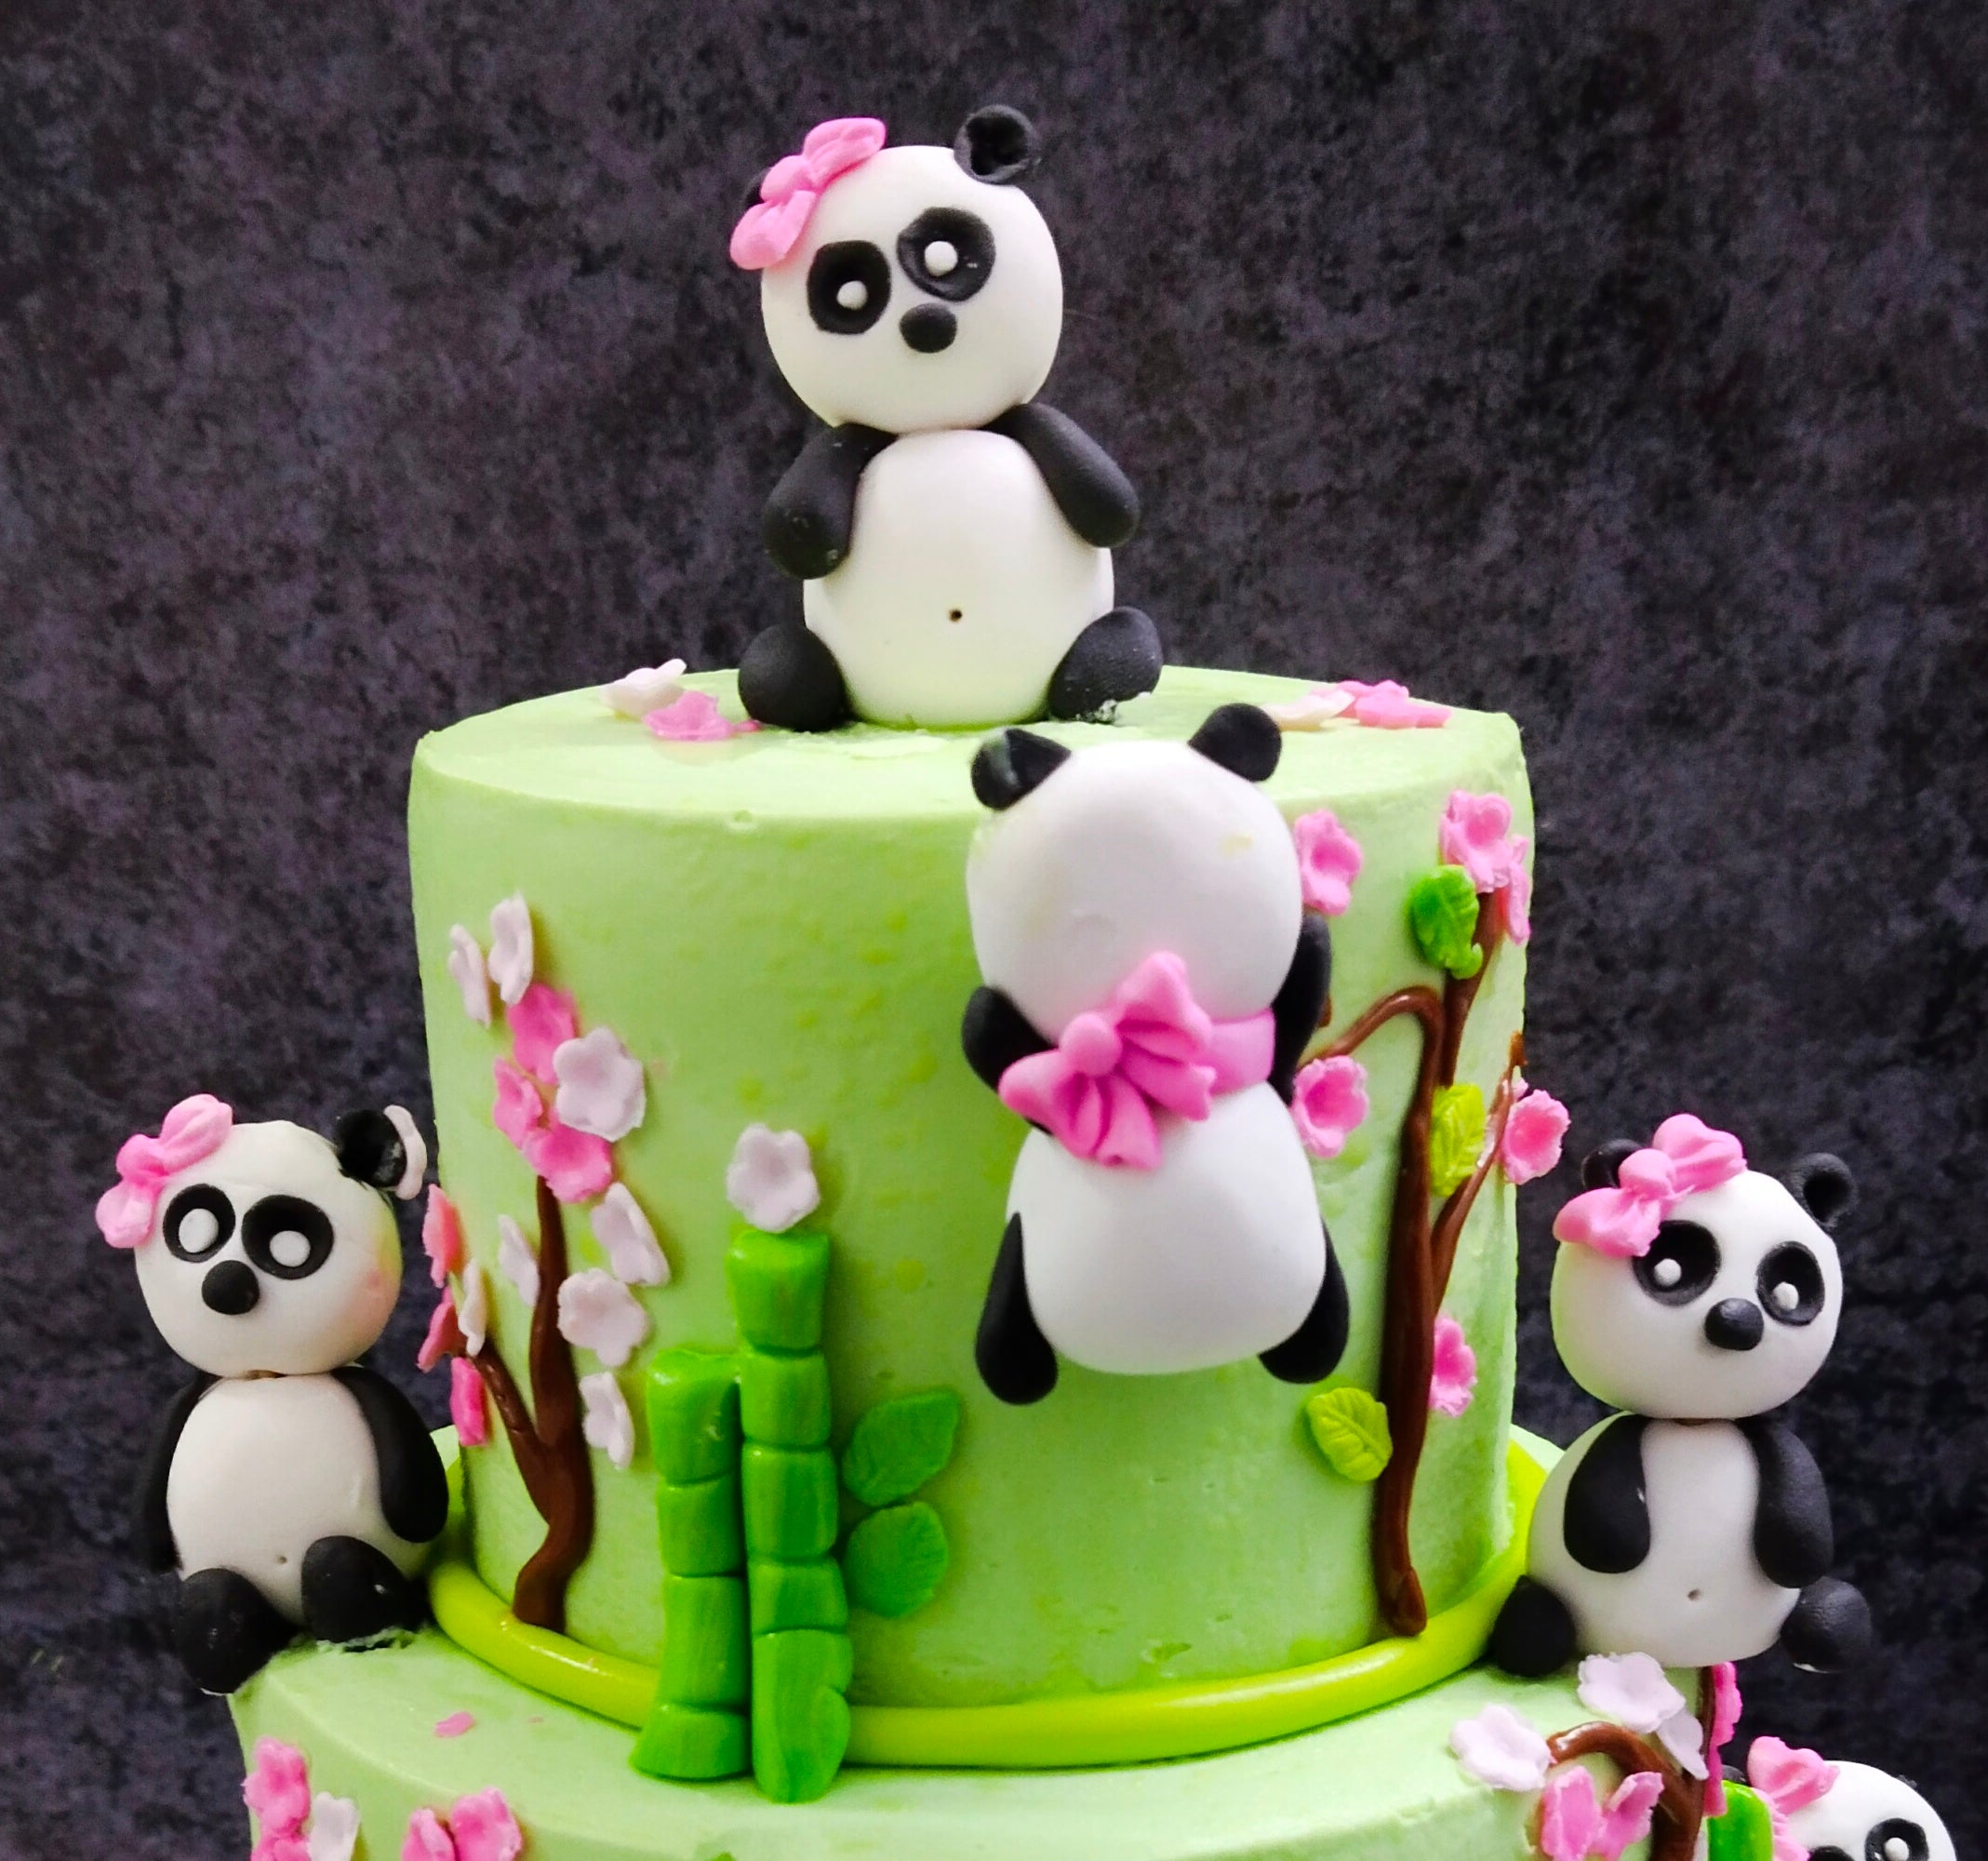 Cupcake Design - 21st Birthday cake for Laura who loves Pandas! 🐼 |  Facebook